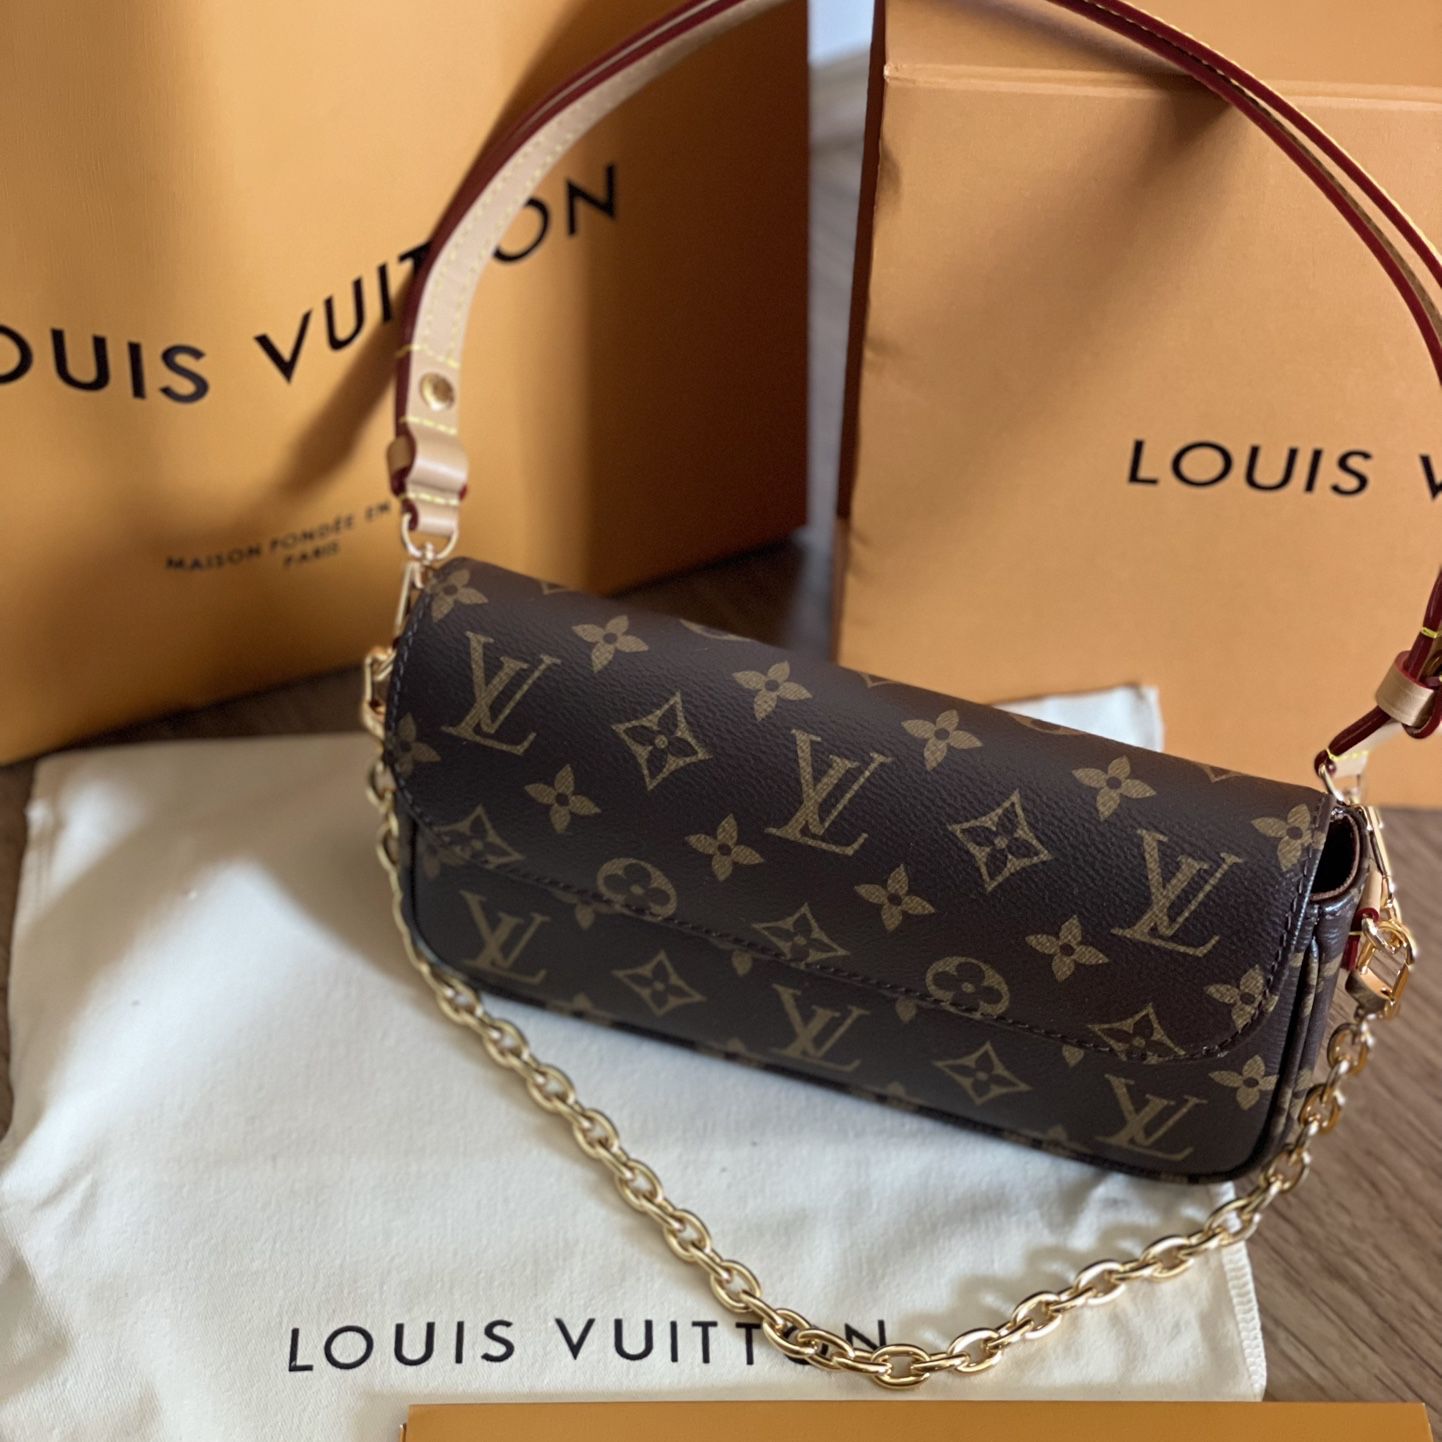 Authentic LOUIS VUITTON Blois Bag for Sale in Los Angeles, CA - OfferUp